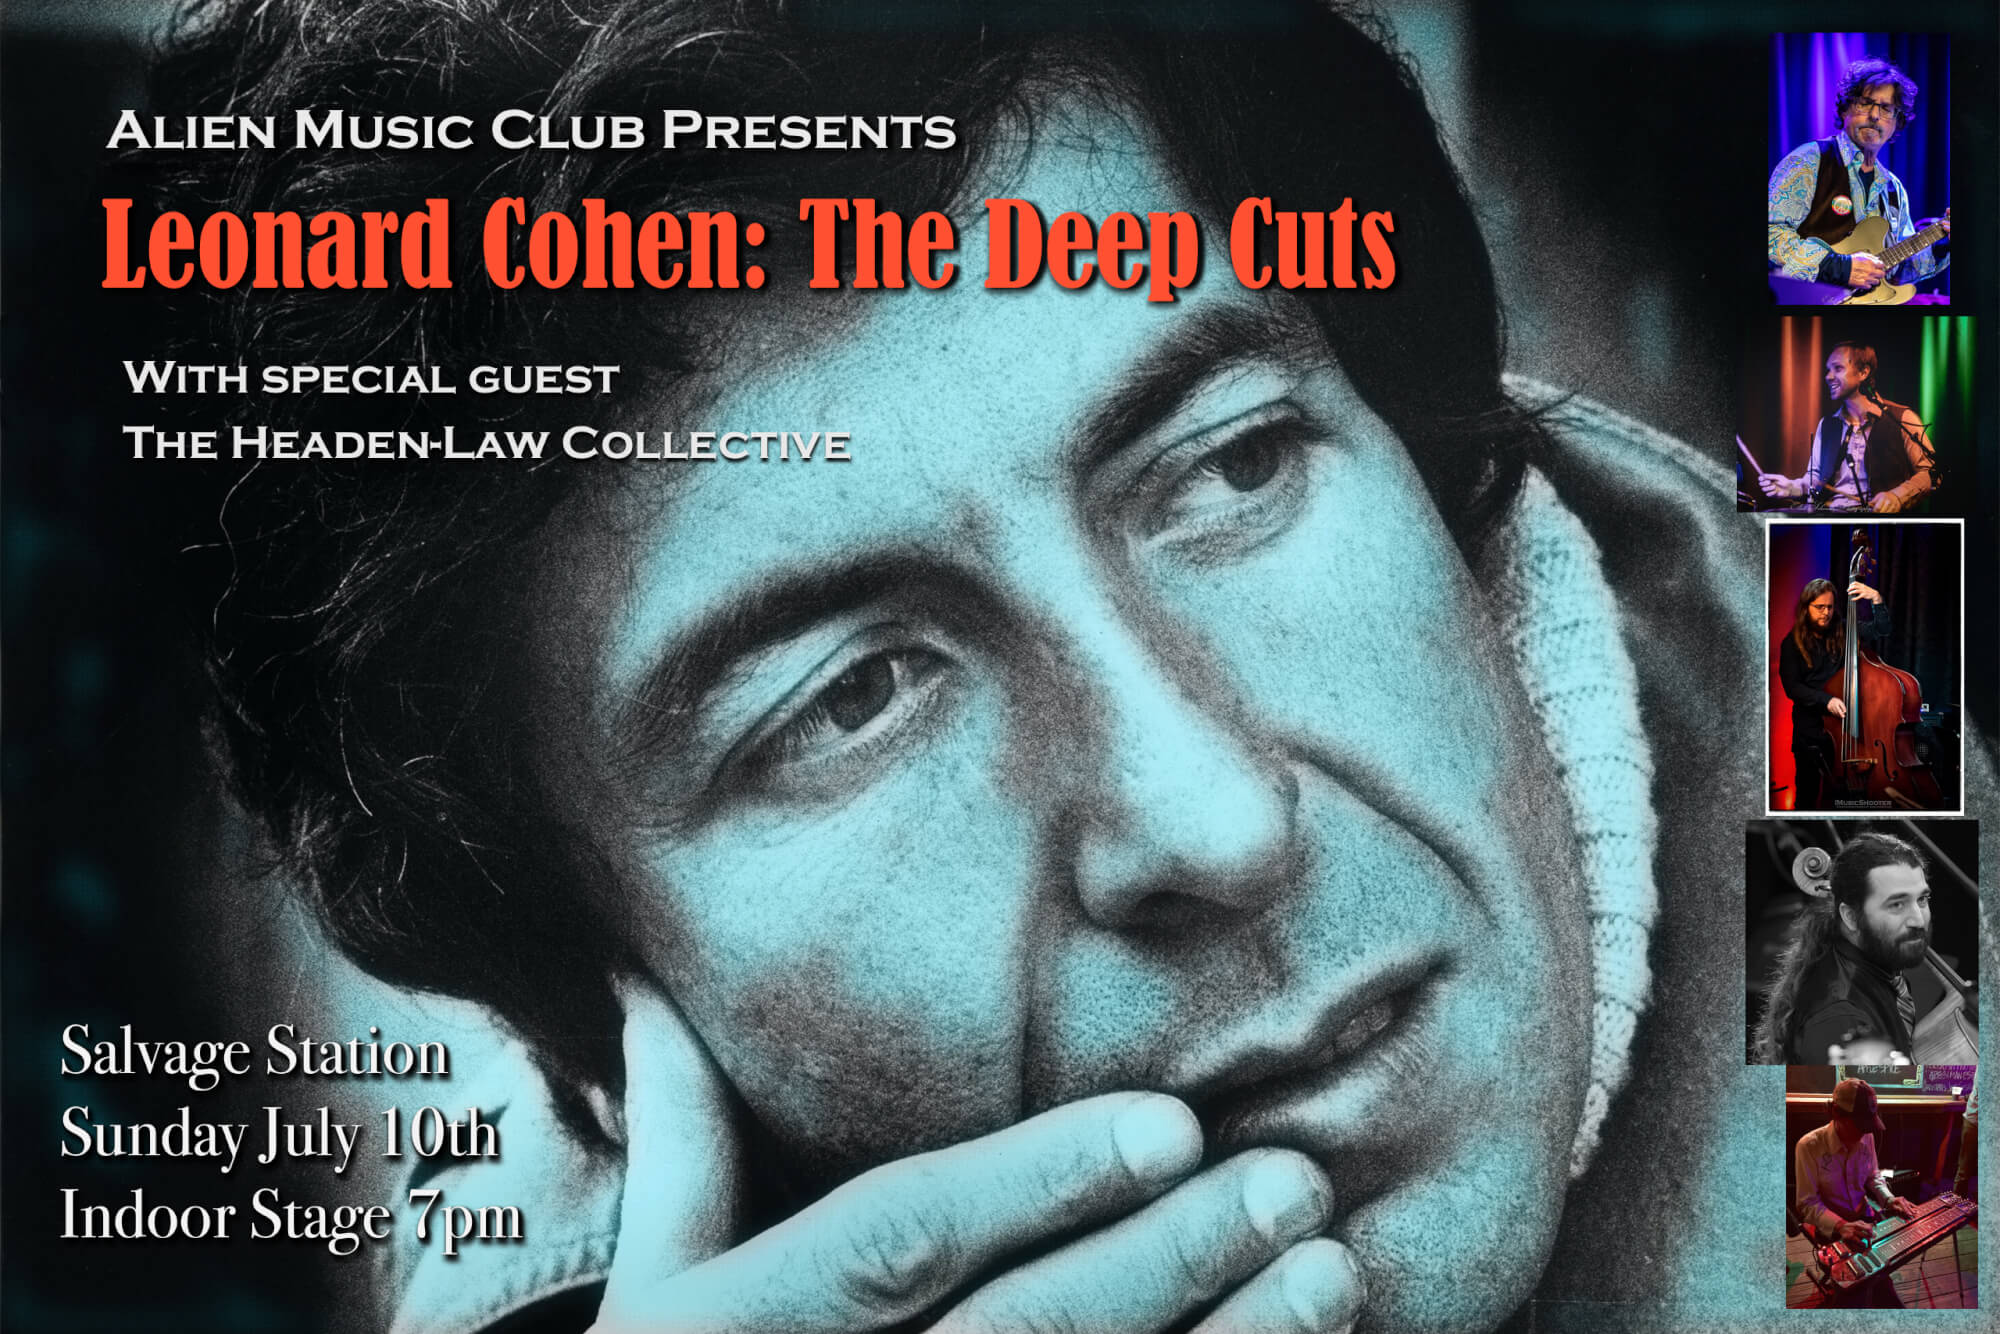 Alien Music Club Presents: “Leonard Cohen: The Deep Cuts”